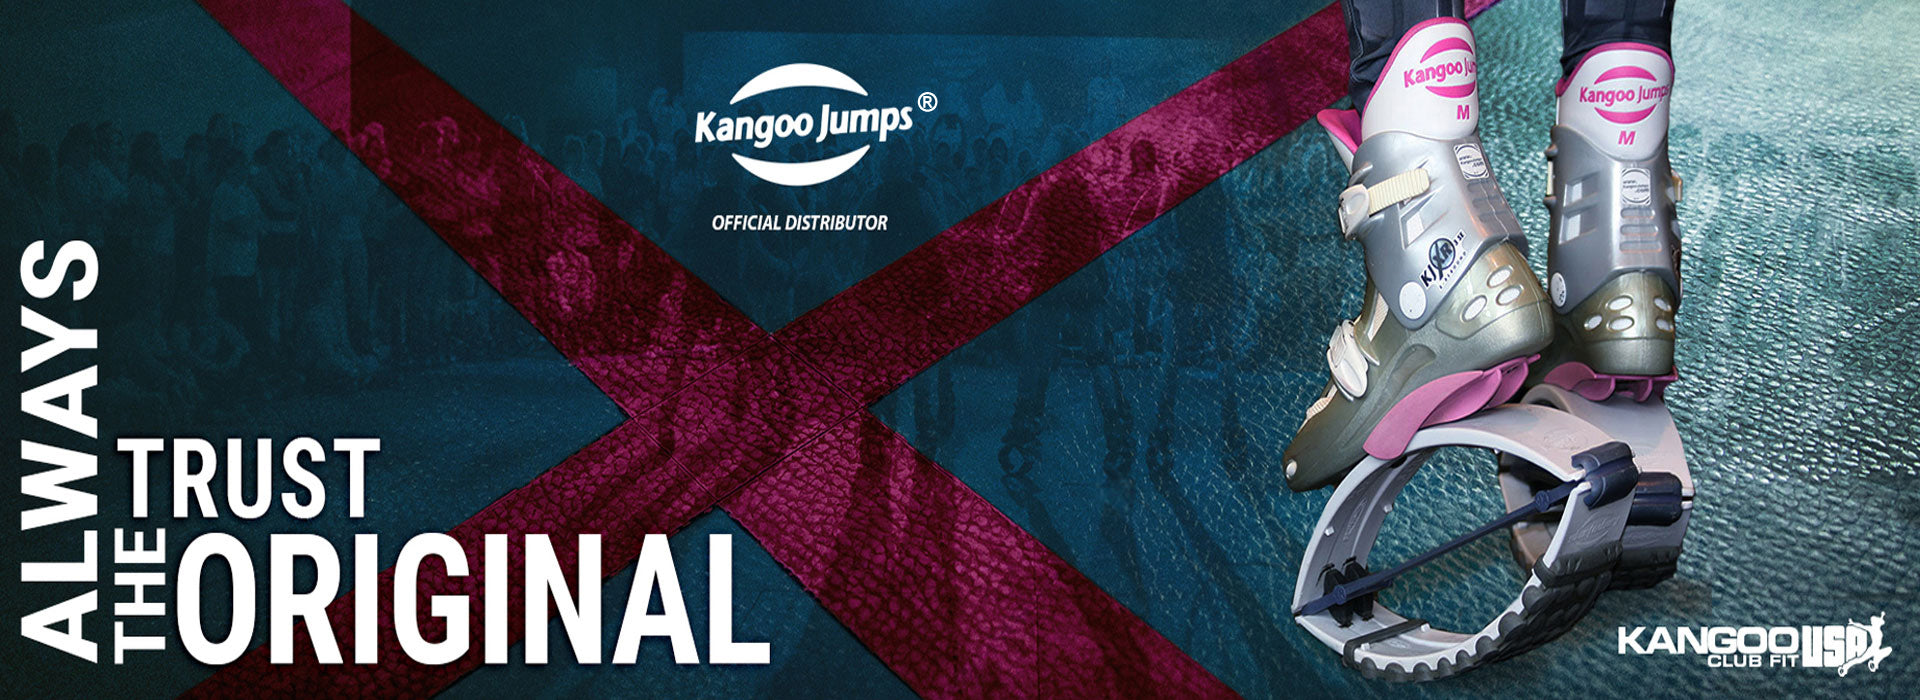 Kangoo Jumps (@kangoojumps) / X